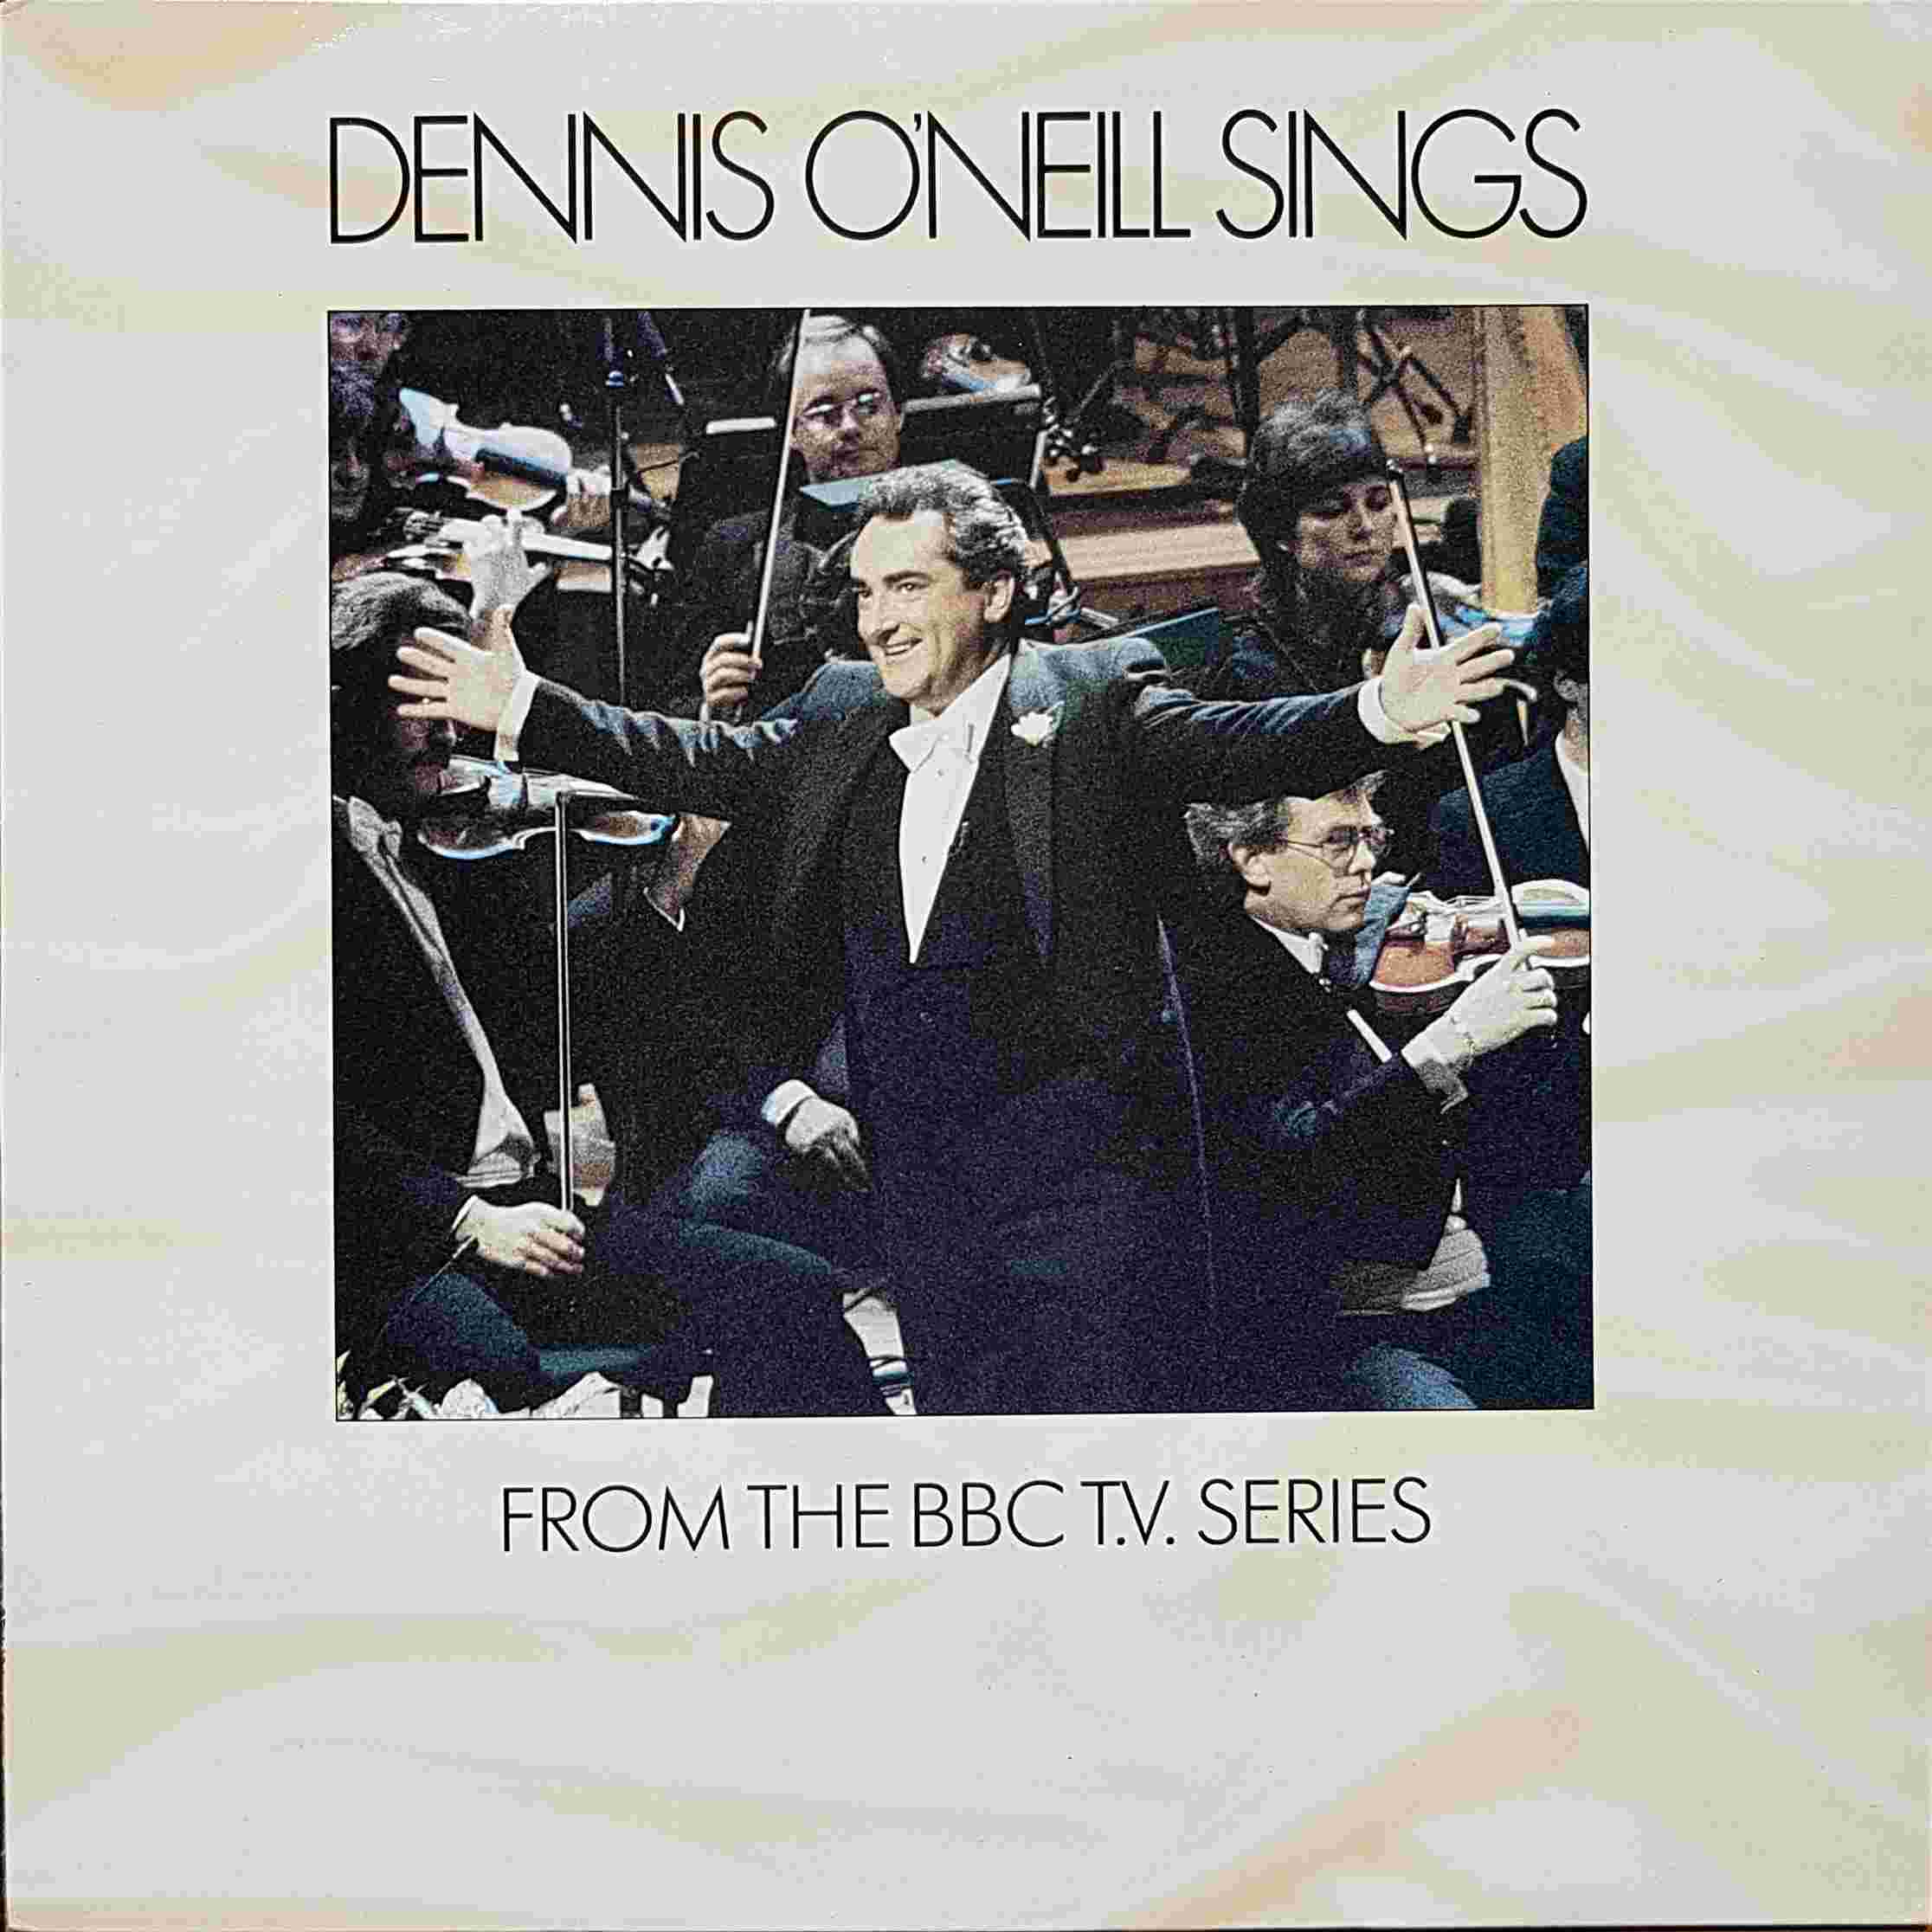 Picture of REN 626 Dennis O'Neill sings by artist Dennis O'Neill 